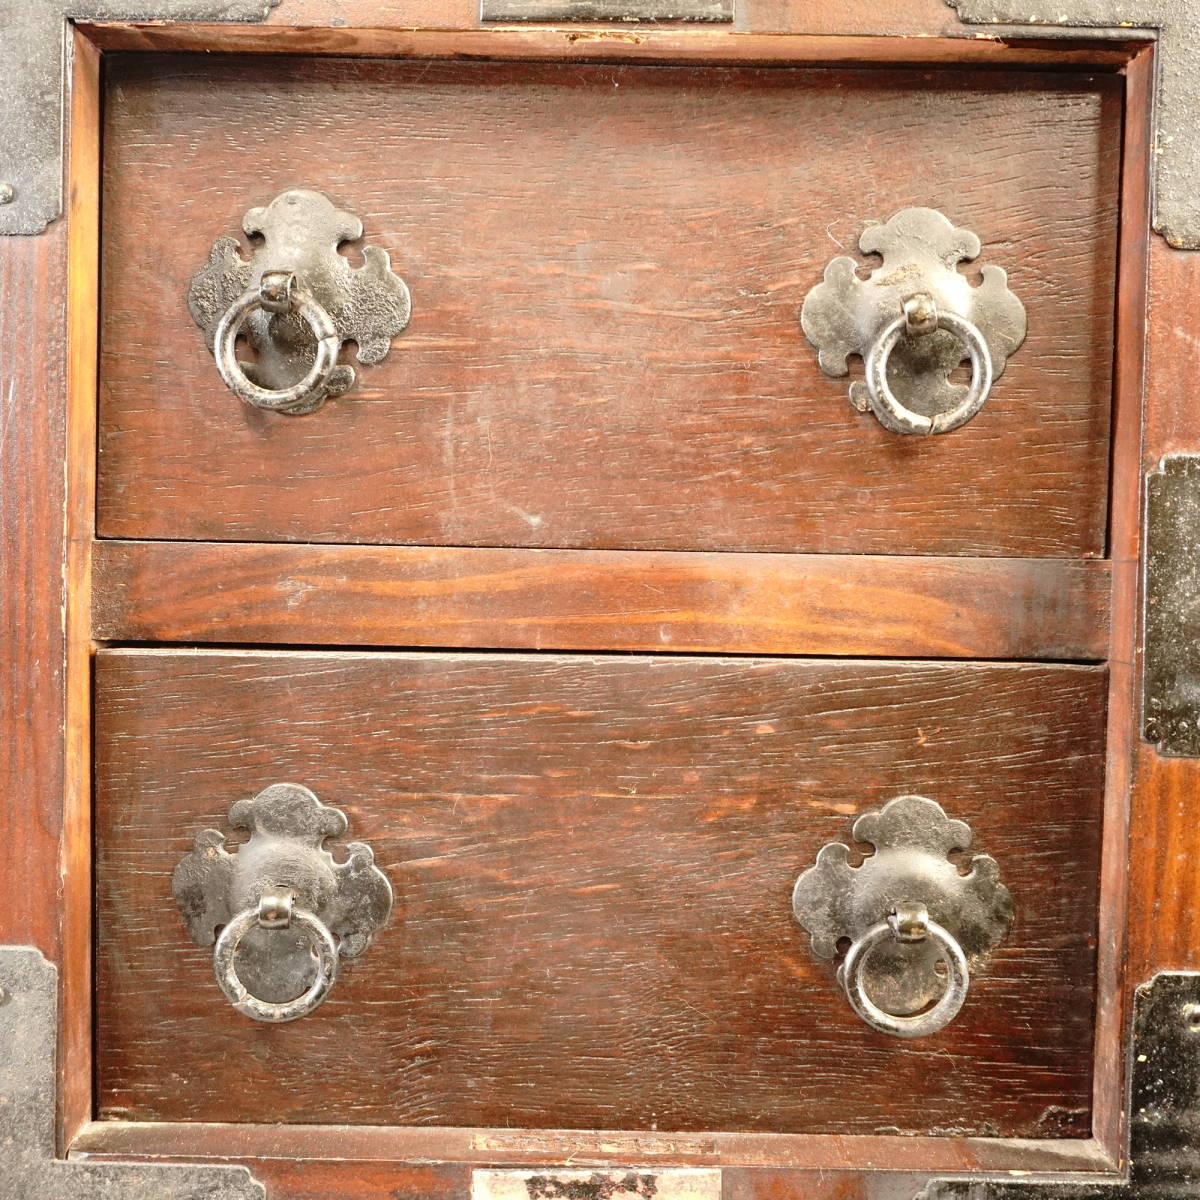  Meiji ~ Taisho period car chest of drawers era thing. chest of drawers era chest of drawers key none width 67cm depth 36cm height 64cm IKT411